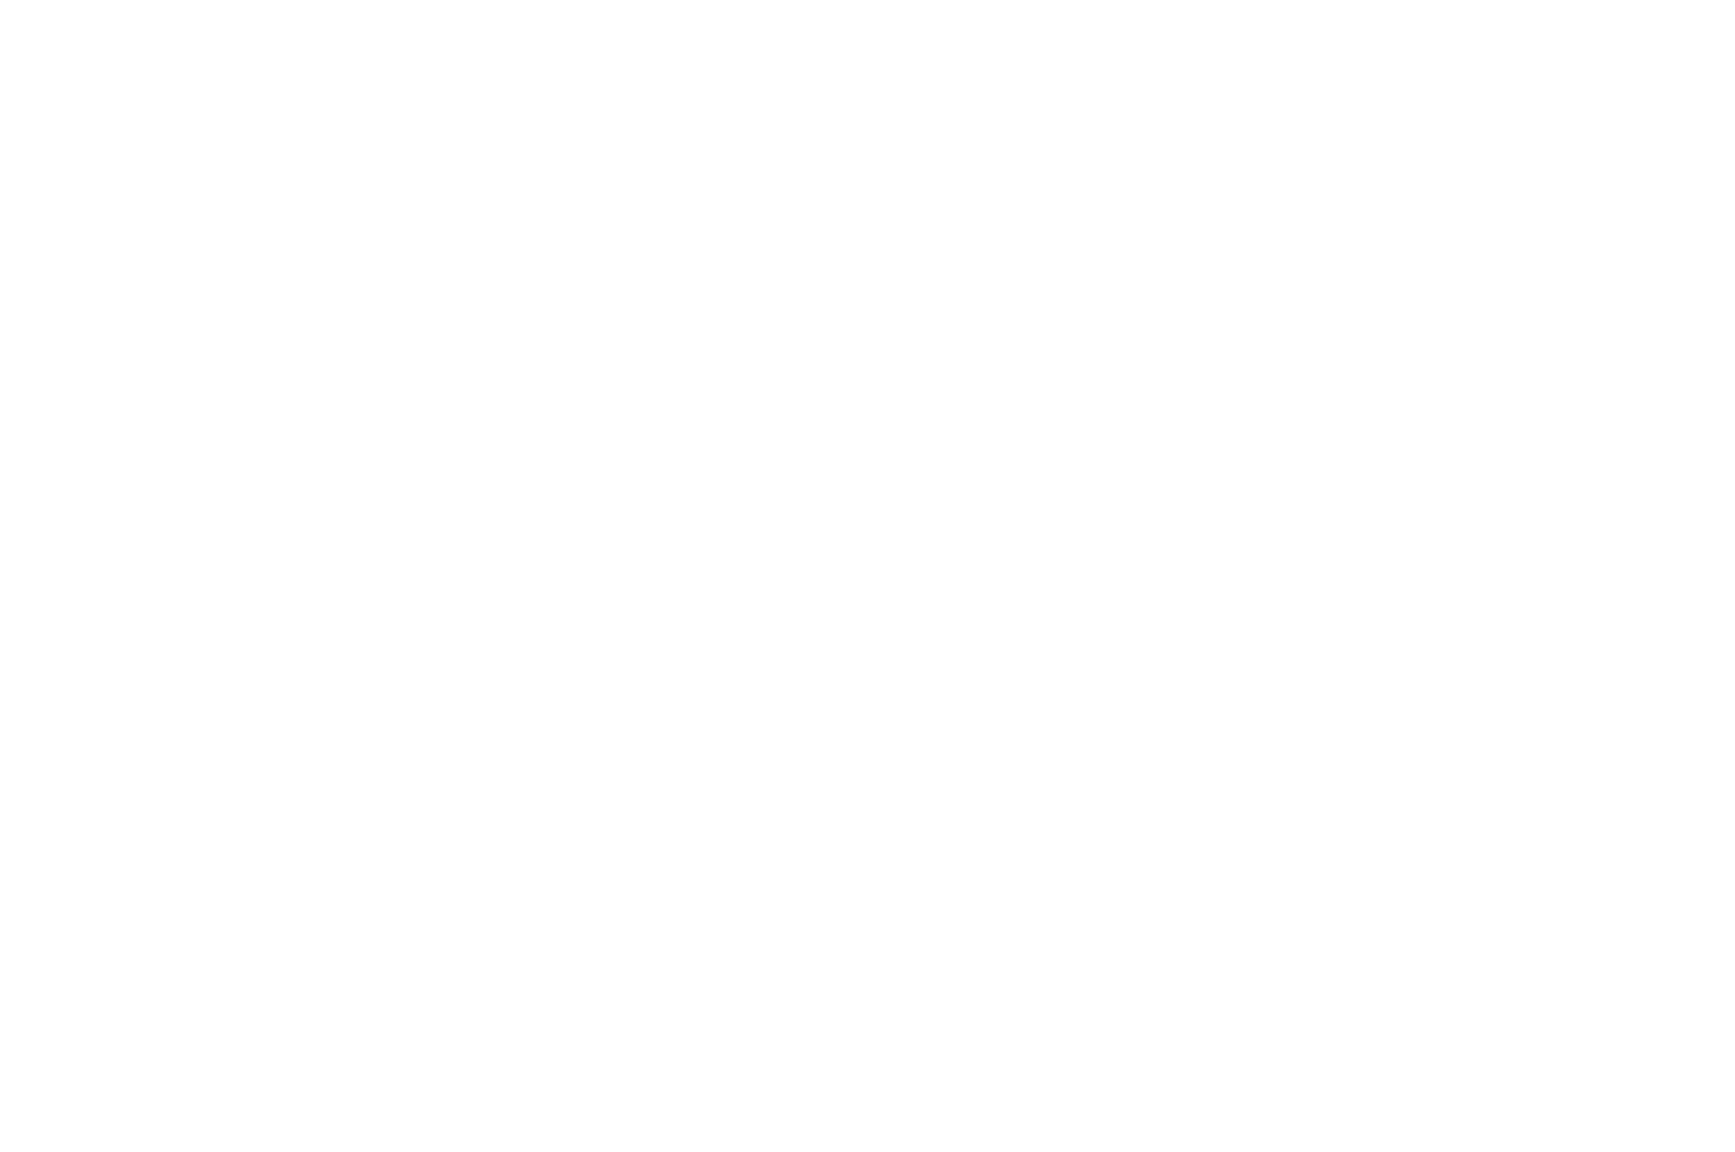 BEST MUSIC VIDEO - Paris Women Festival - 2022